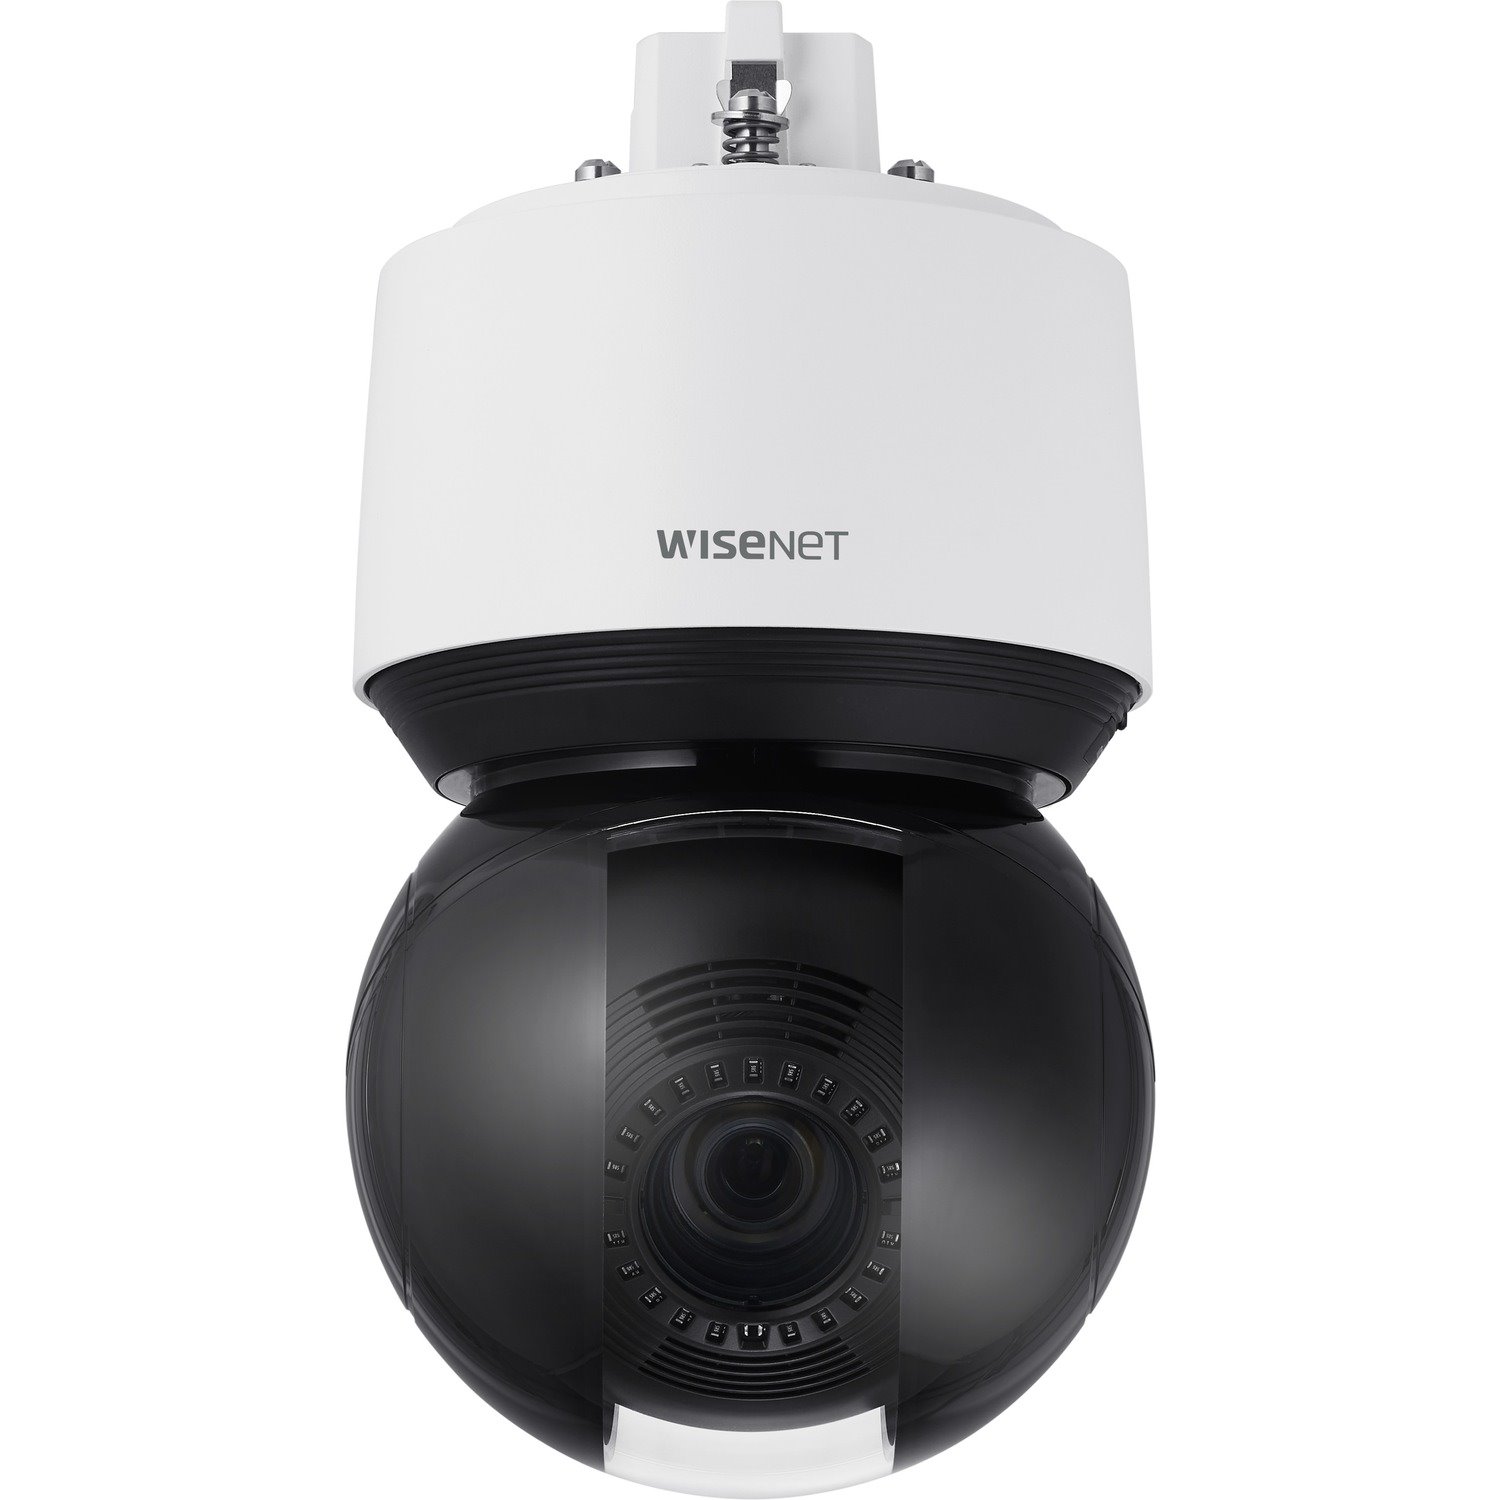 Wisenet QNP-6320R 2 Megapixel Full HD Network Camera - Color - White, Black